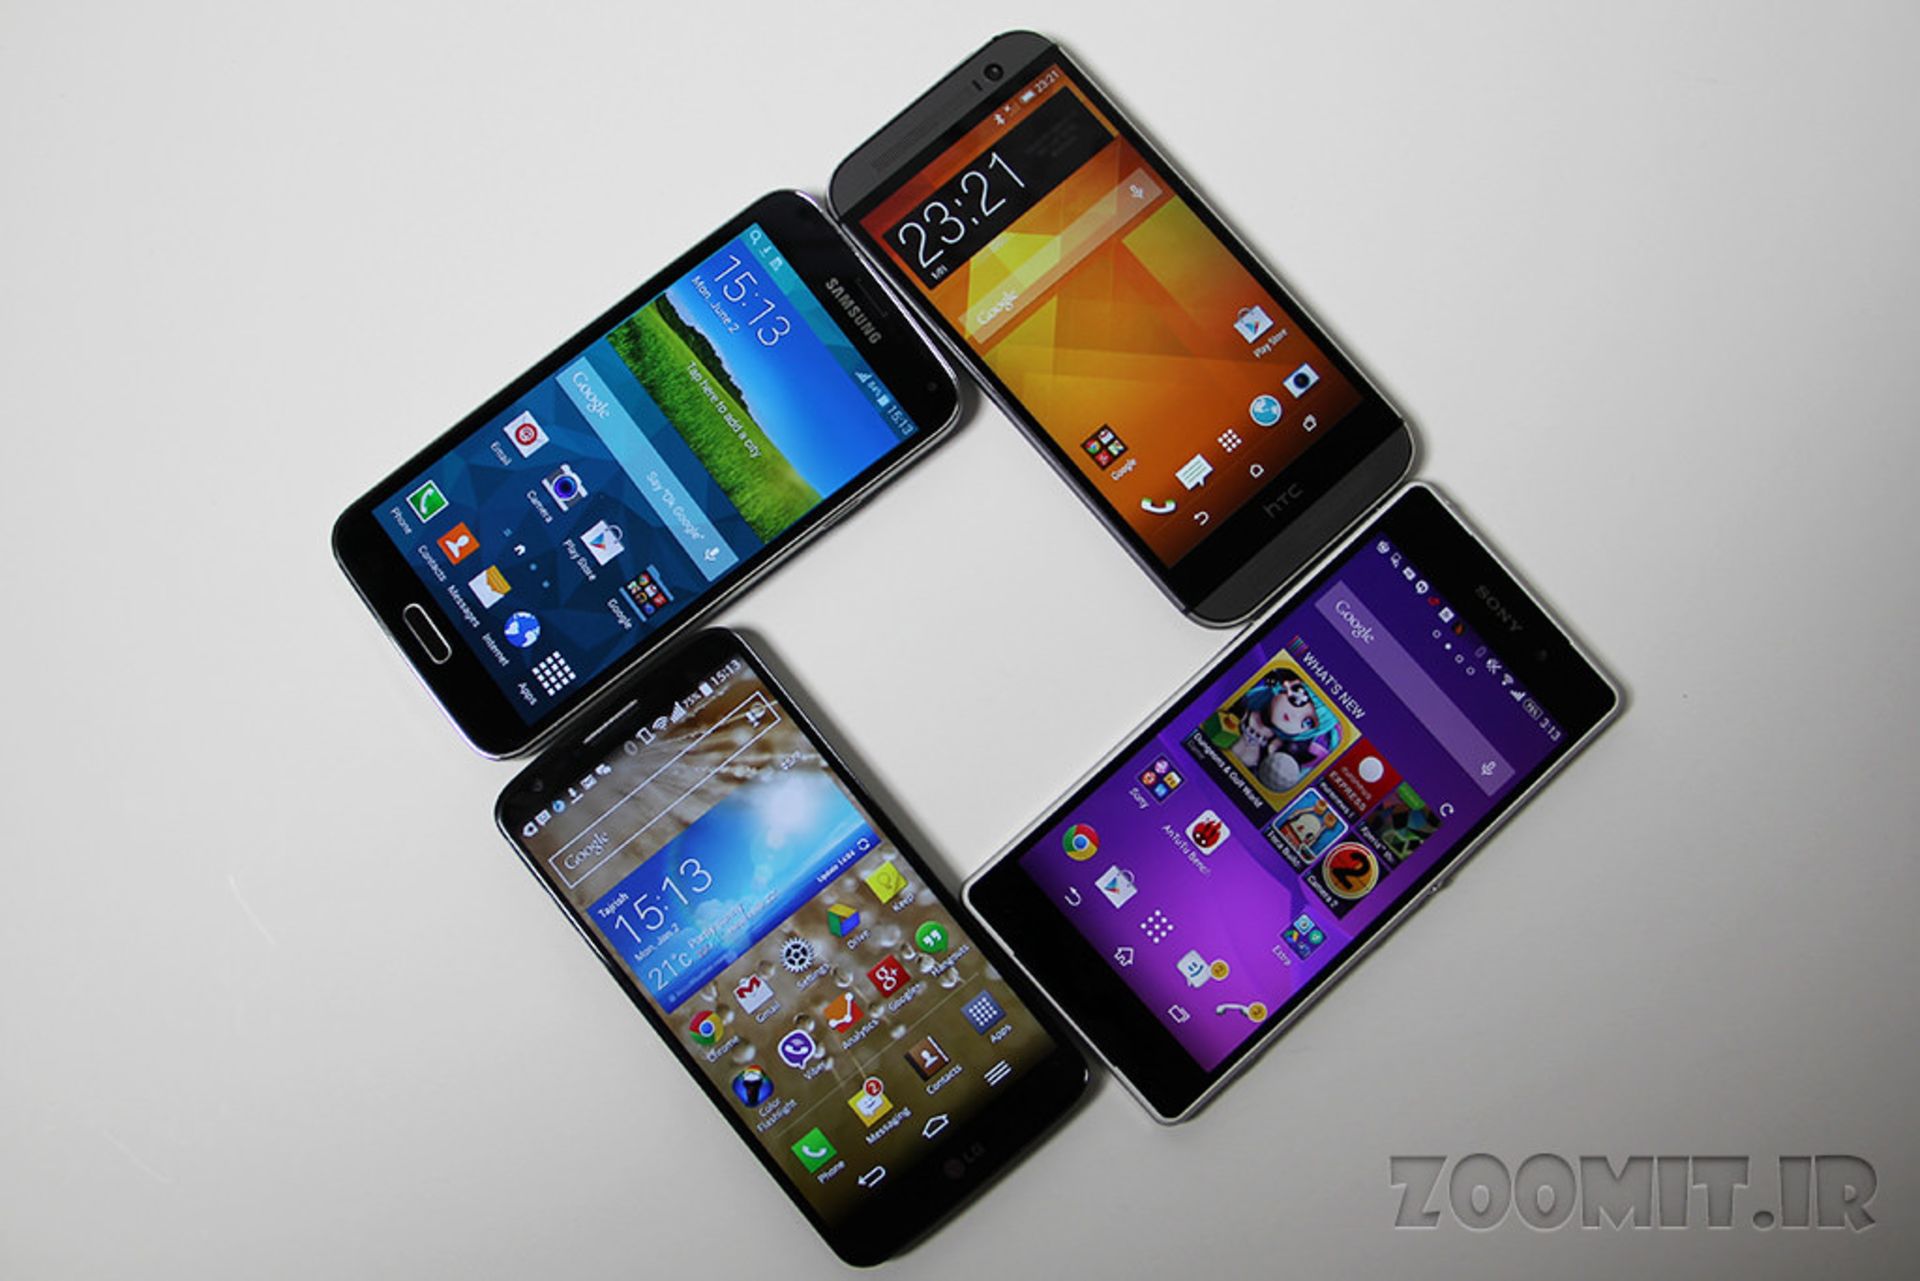 HTC one m8 vs Xperia Z2 vs Galaxy S5 vs LG G2 Software